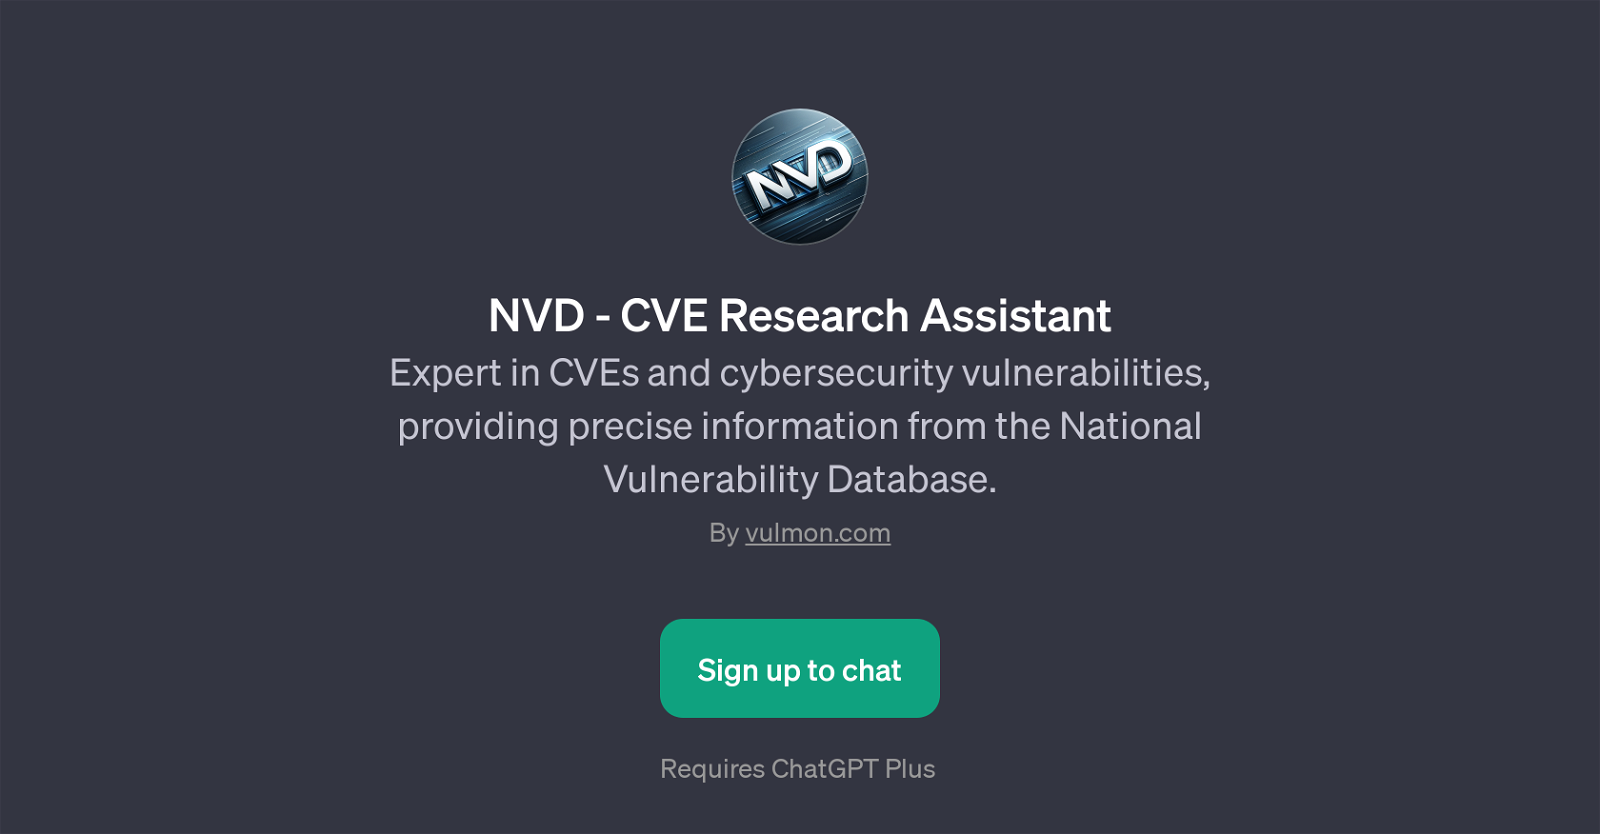 NVD - CVE Research Assistant website